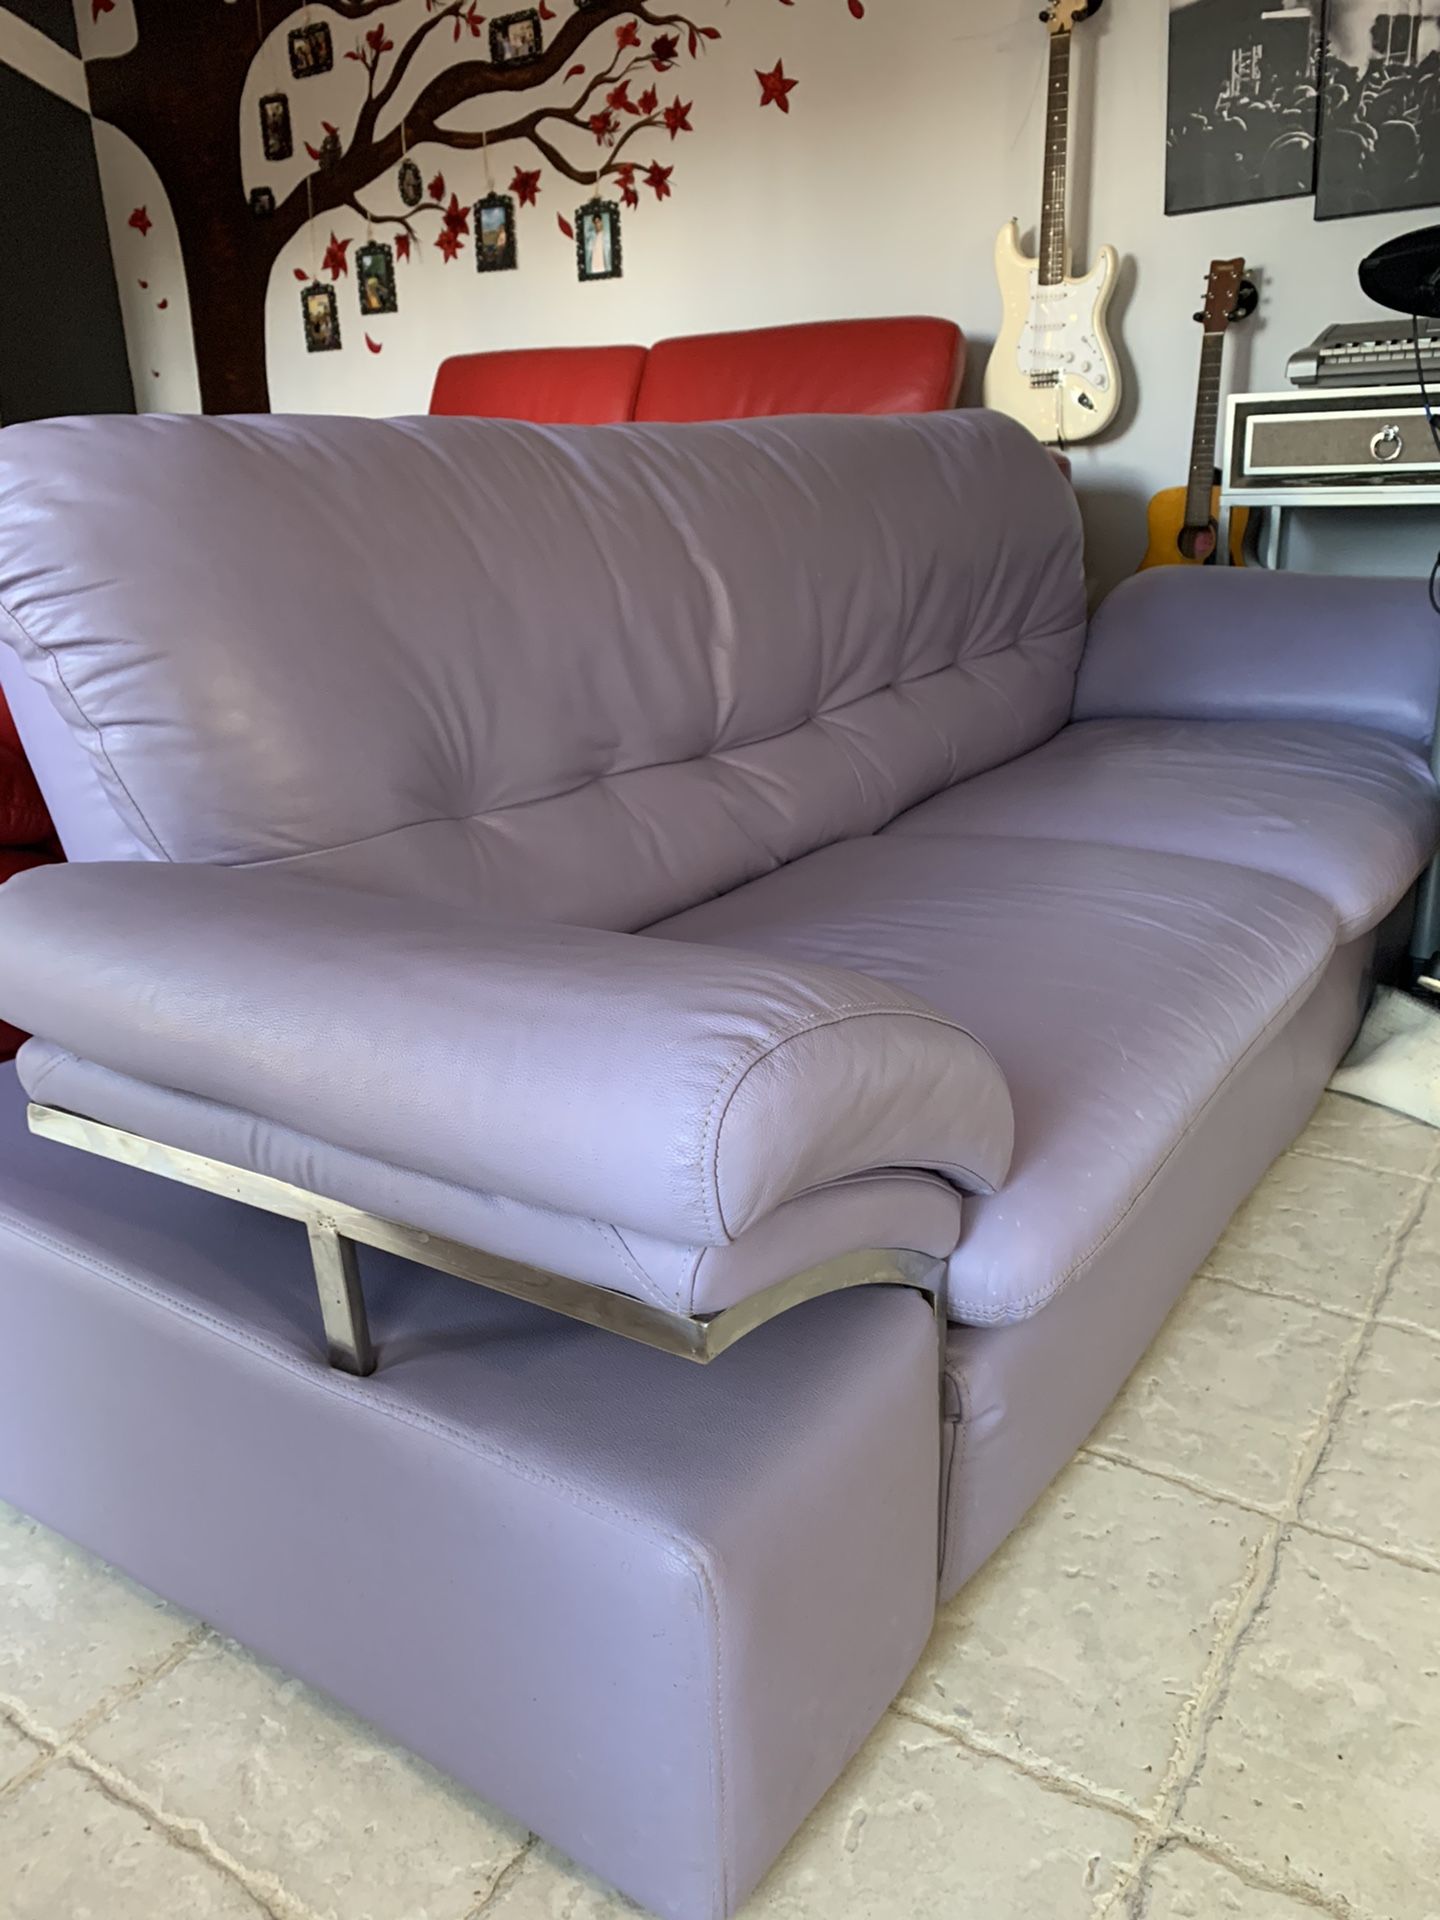 $100 - Lavender/ Lilac Leather sofa